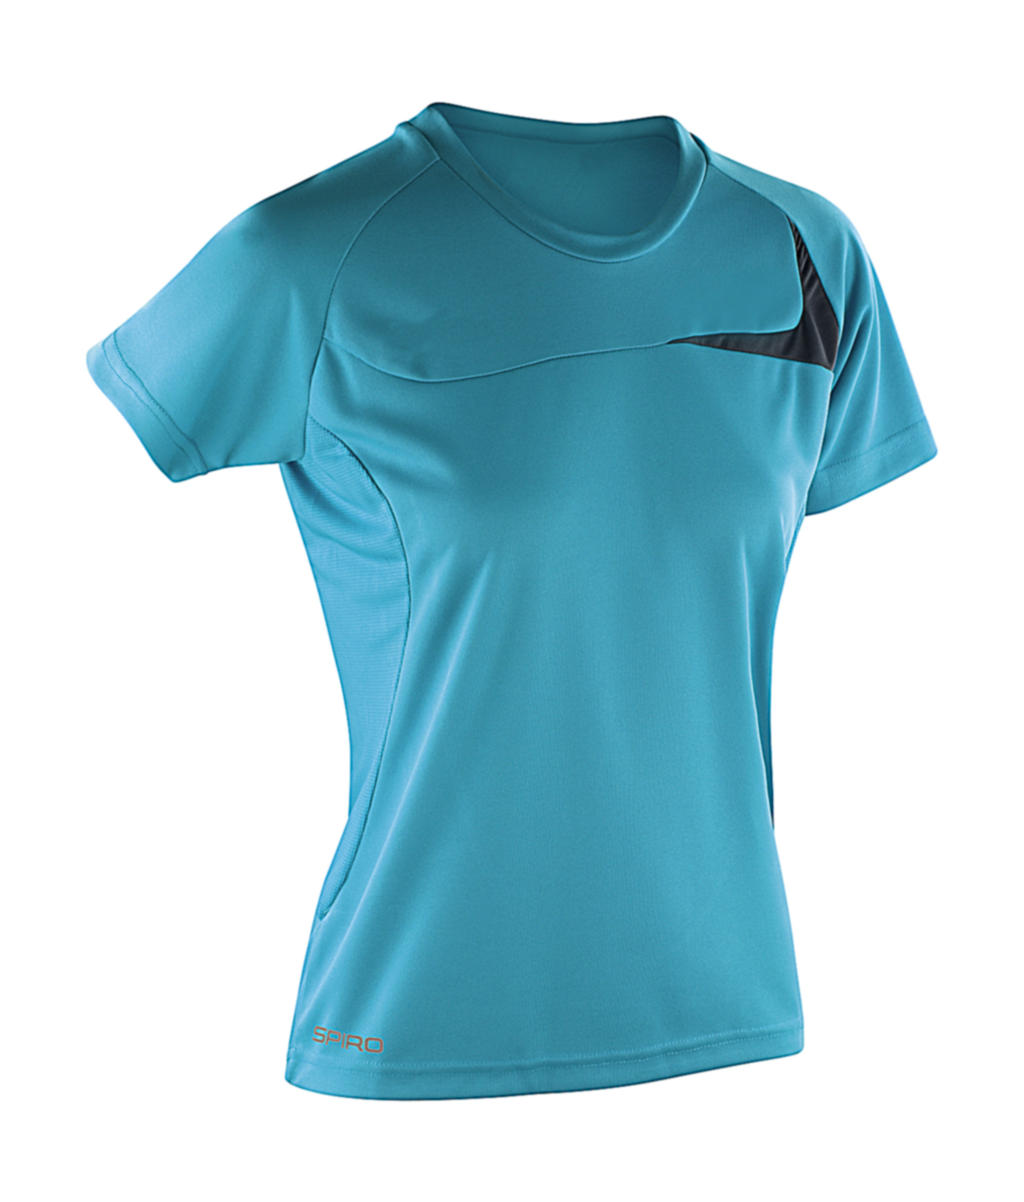  Spiro Ladies Dash Training Shirt in Farbe Aqua/Grey